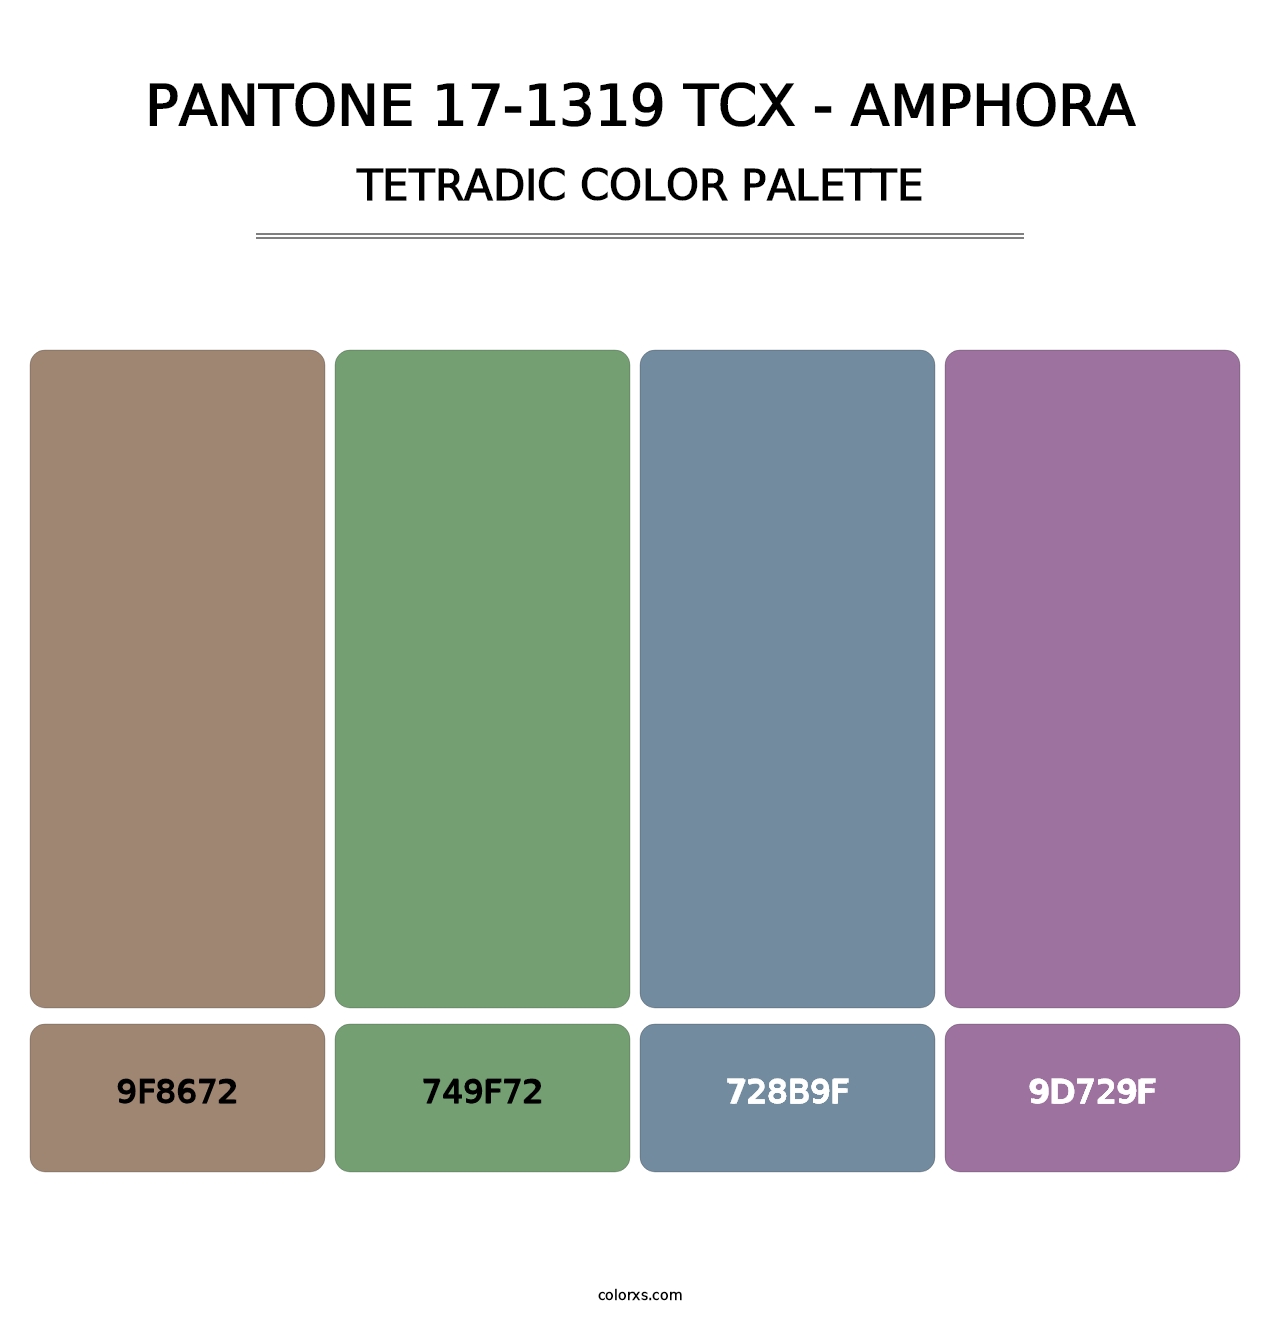 PANTONE 17-1319 TCX - Amphora - Tetradic Color Palette